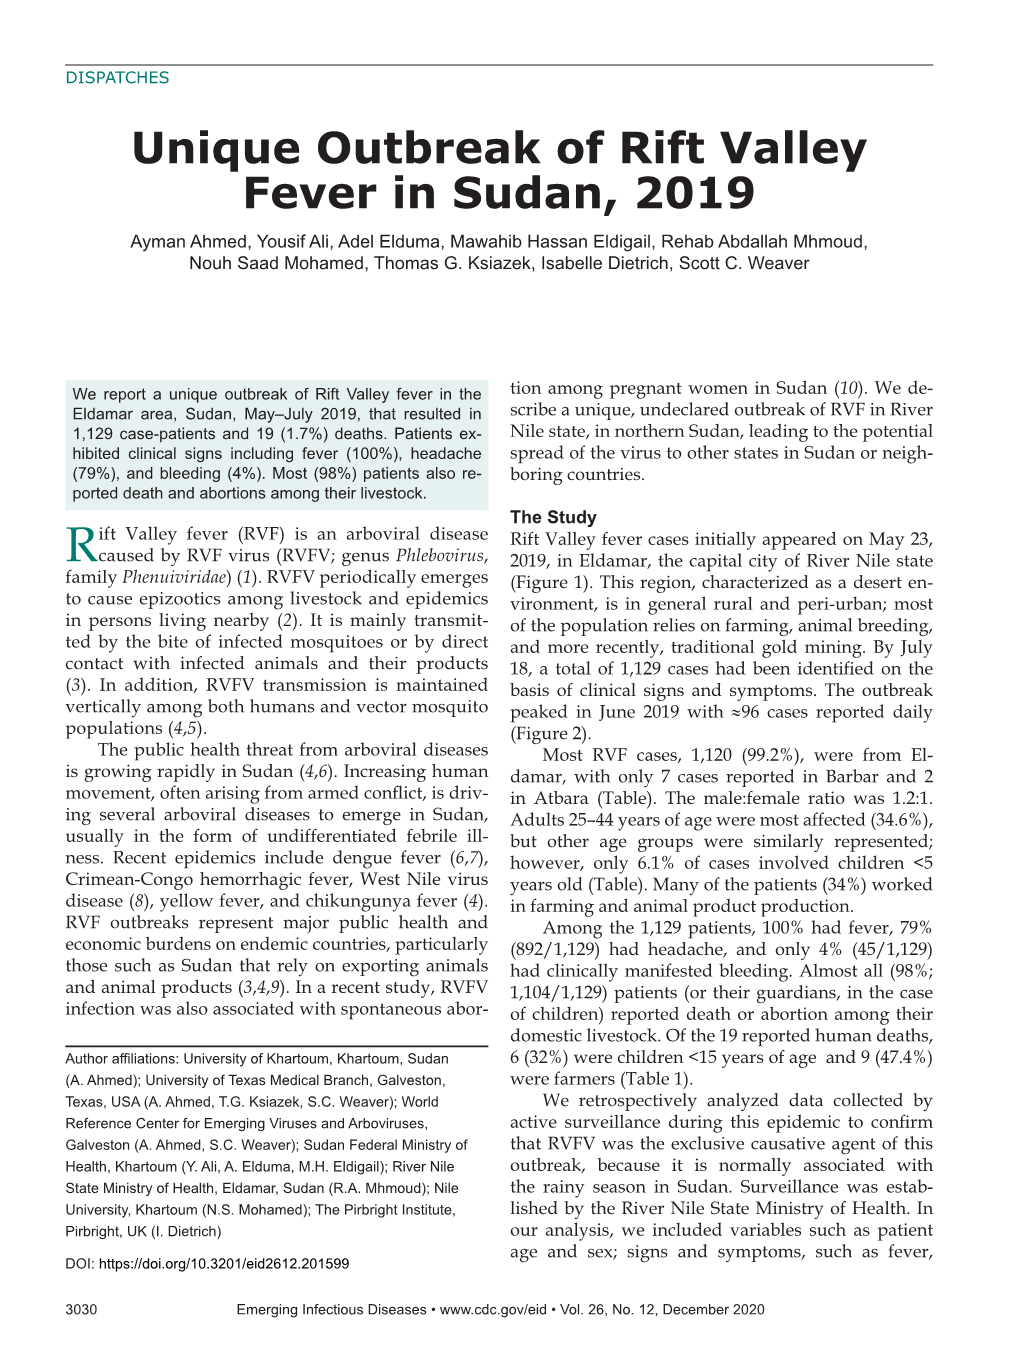 Unique Outbreak of Rift Valley Fever in Sudan, 2019 Ayman Ahmed, Yousif Ali, Adel Elduma, Mawahib Hassan Eldigail, Rehab Abdallah Mhmoud, Nouh Saad Mohamed, Thomas G